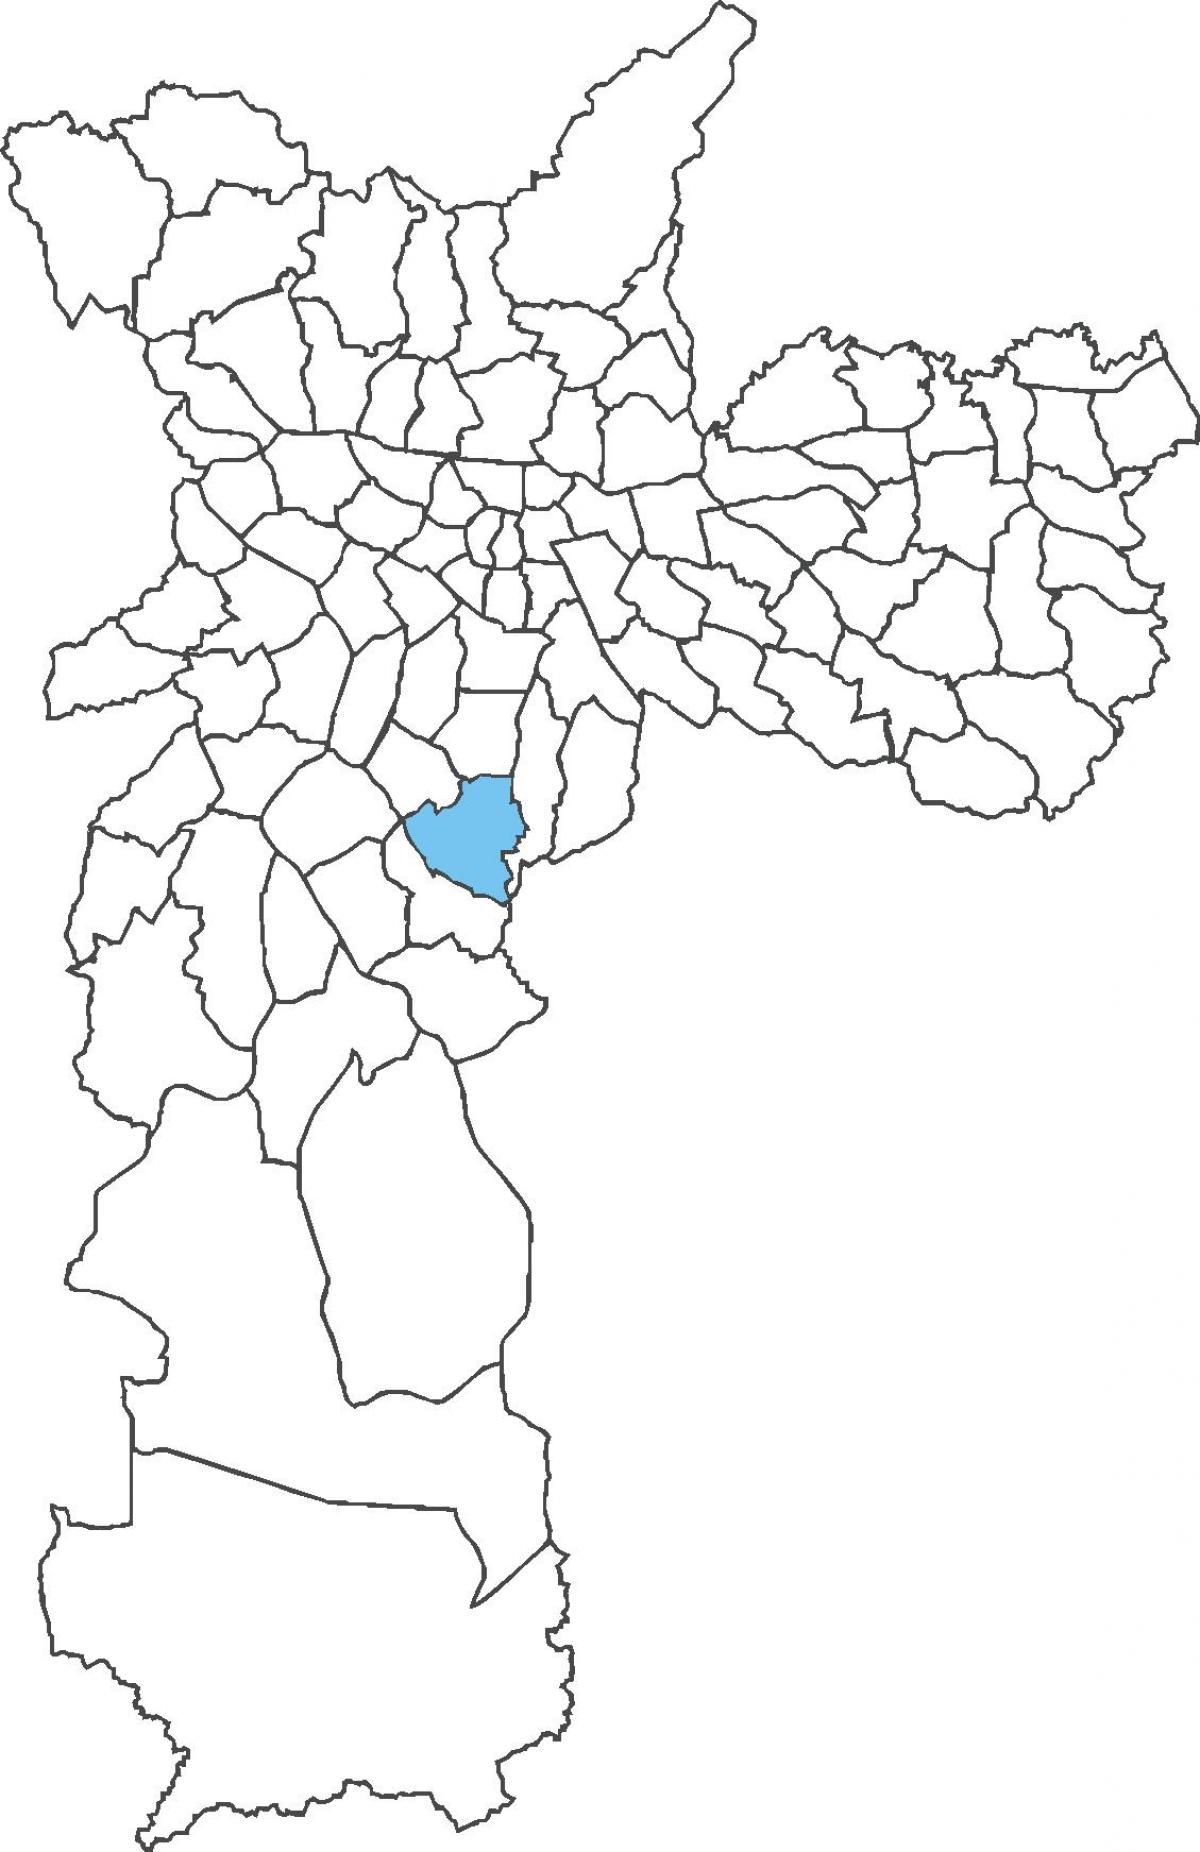 Kart Жабакуара rayonu